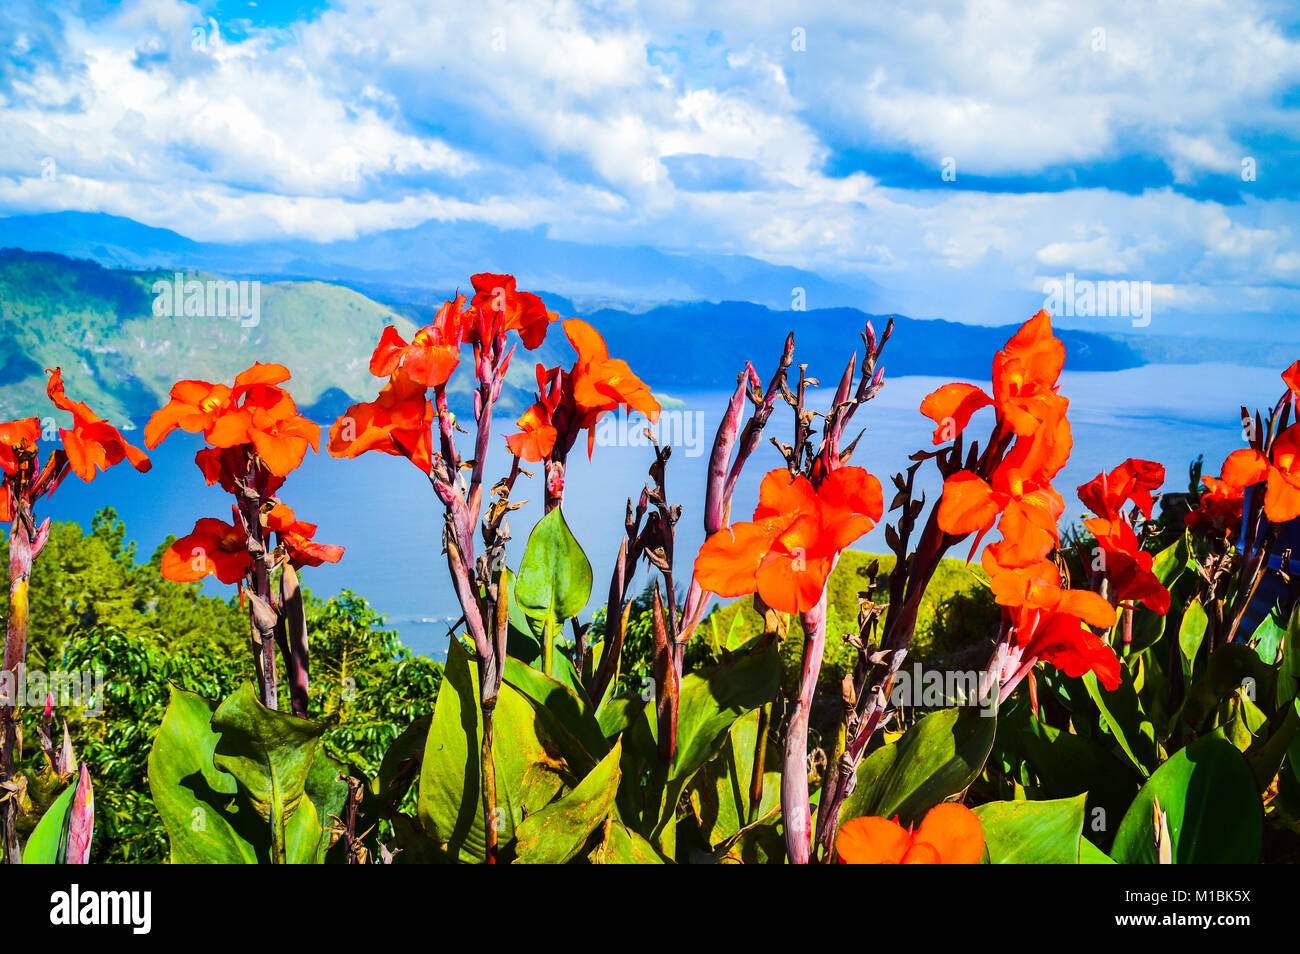 Red iris flowers framing the view of Lake Toba in Samosir North Sumatra, Indonesia Stock Photo